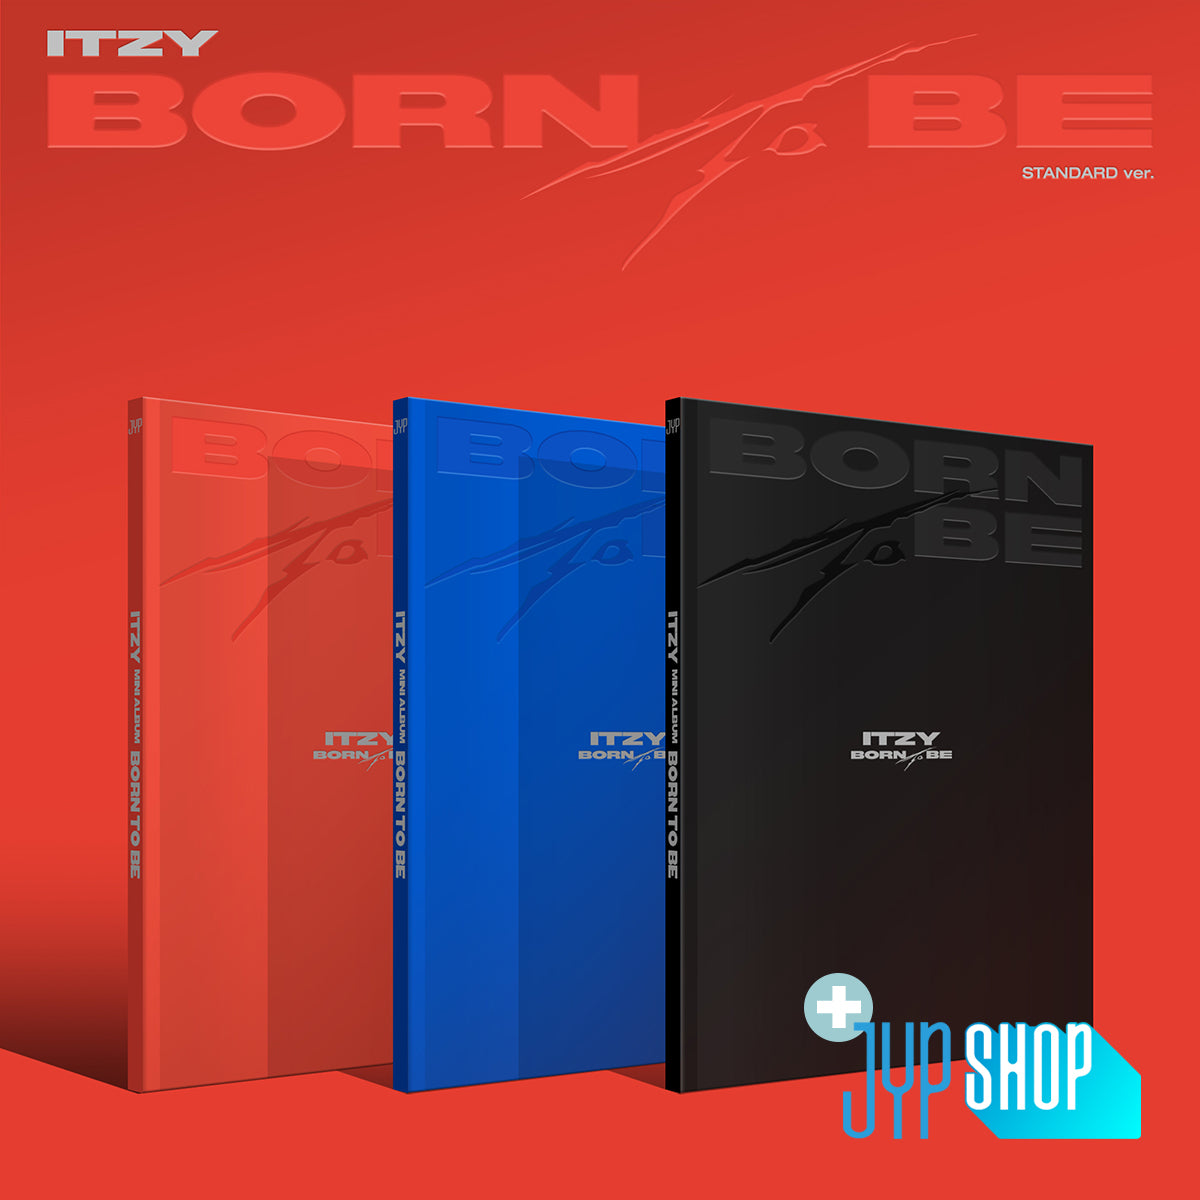 ITZY - BORN TO BE (STANDARD Ver.) + JYP SHOP P.O.B